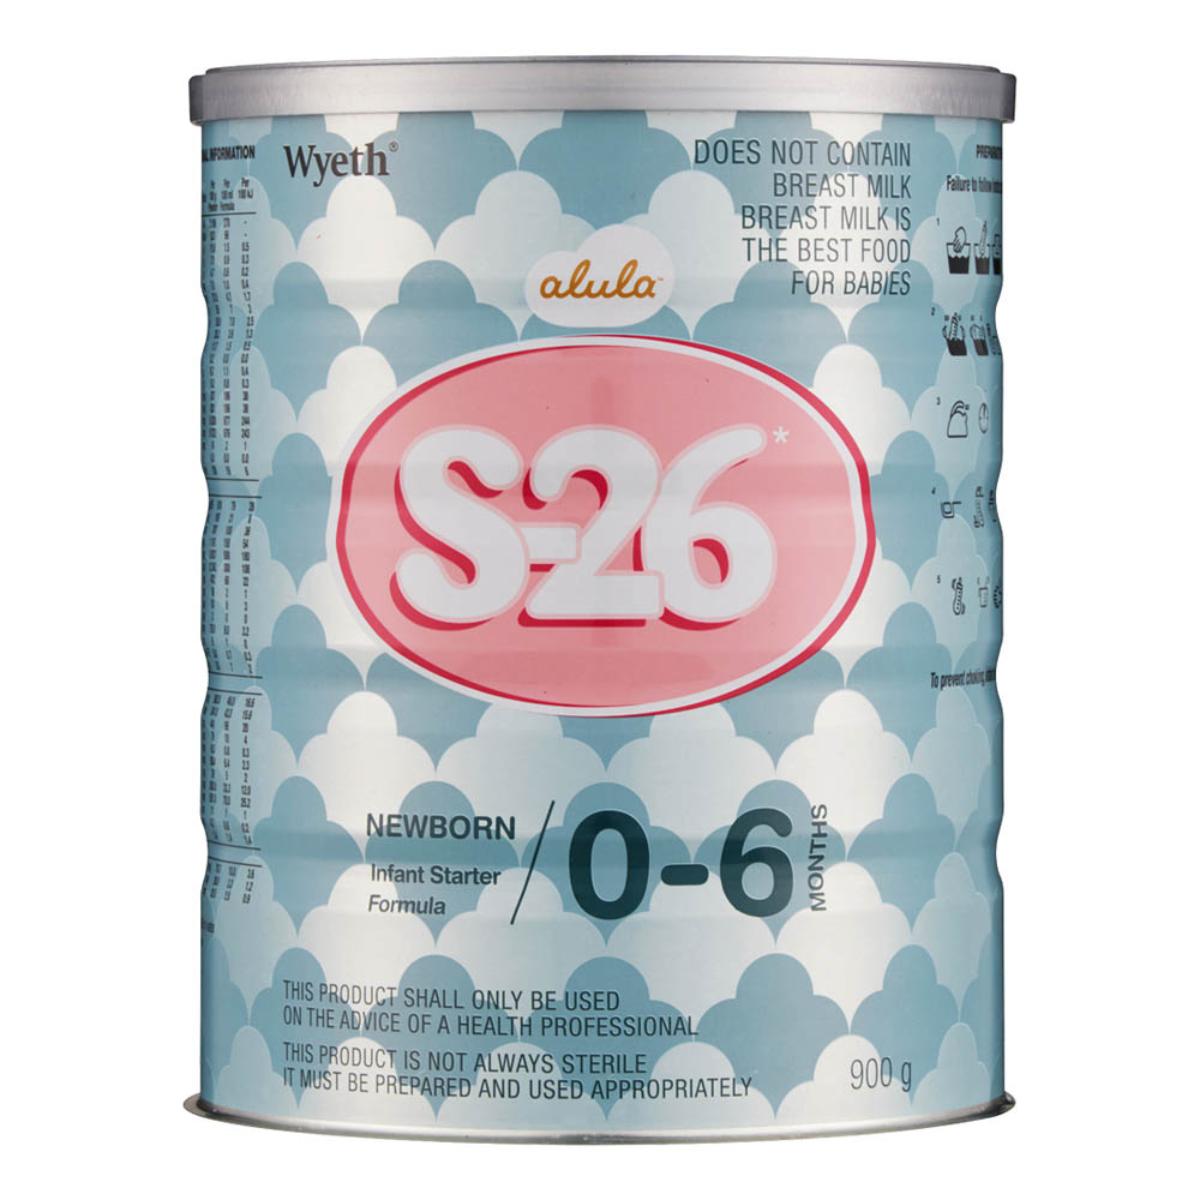 S26 1 Milk Formula 900g - 4700